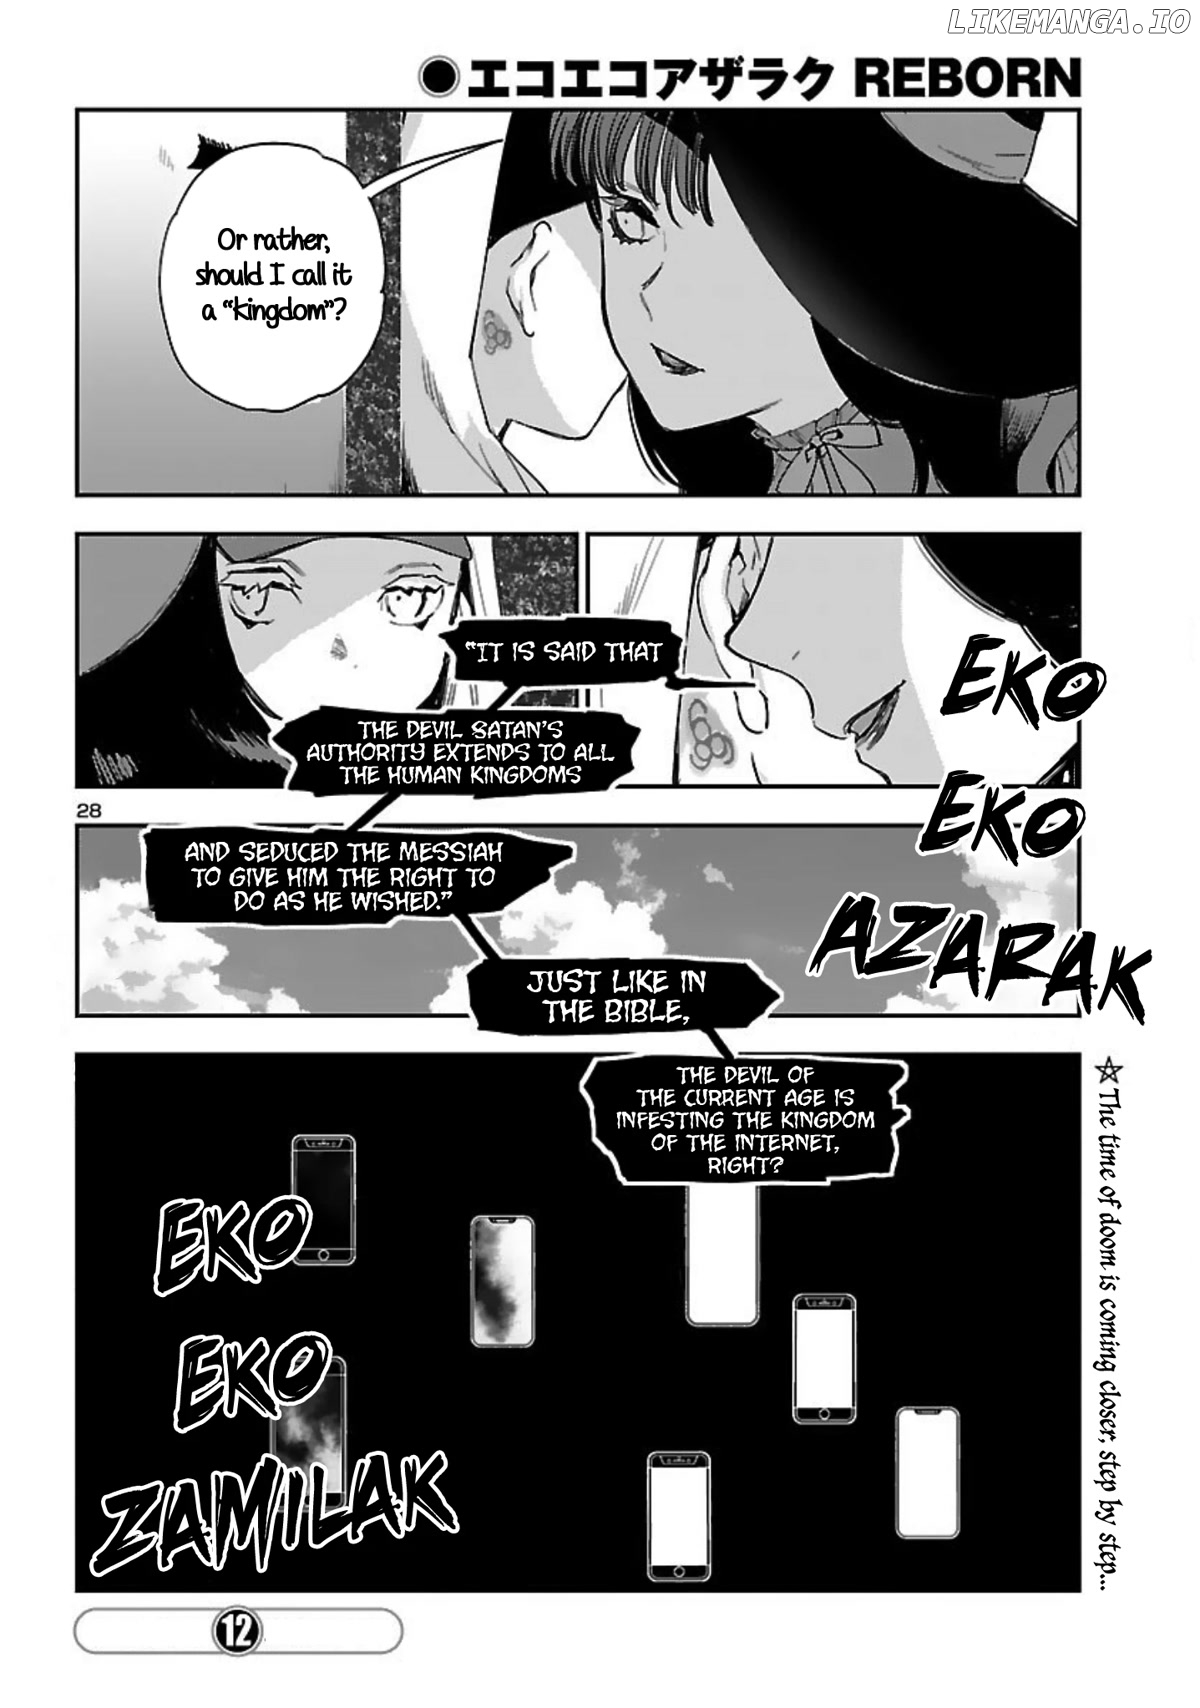 Eko Eko Azaraku: Reborn chapter 16 - page 29